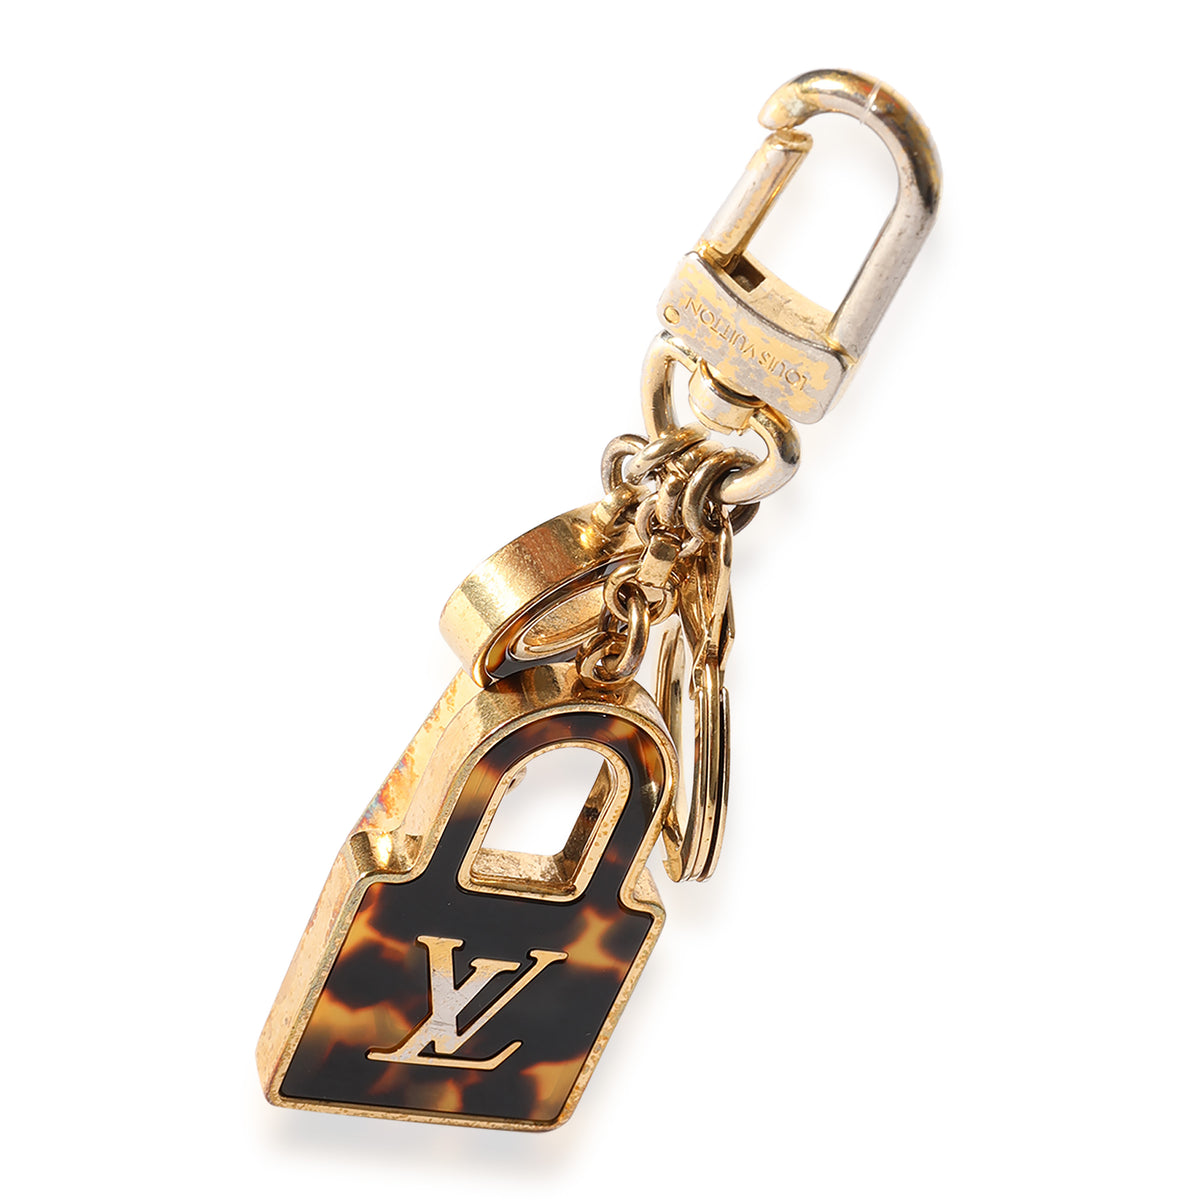 Authentic Vintage Louis Vuitton Gold Tone Handbag Lock and Key